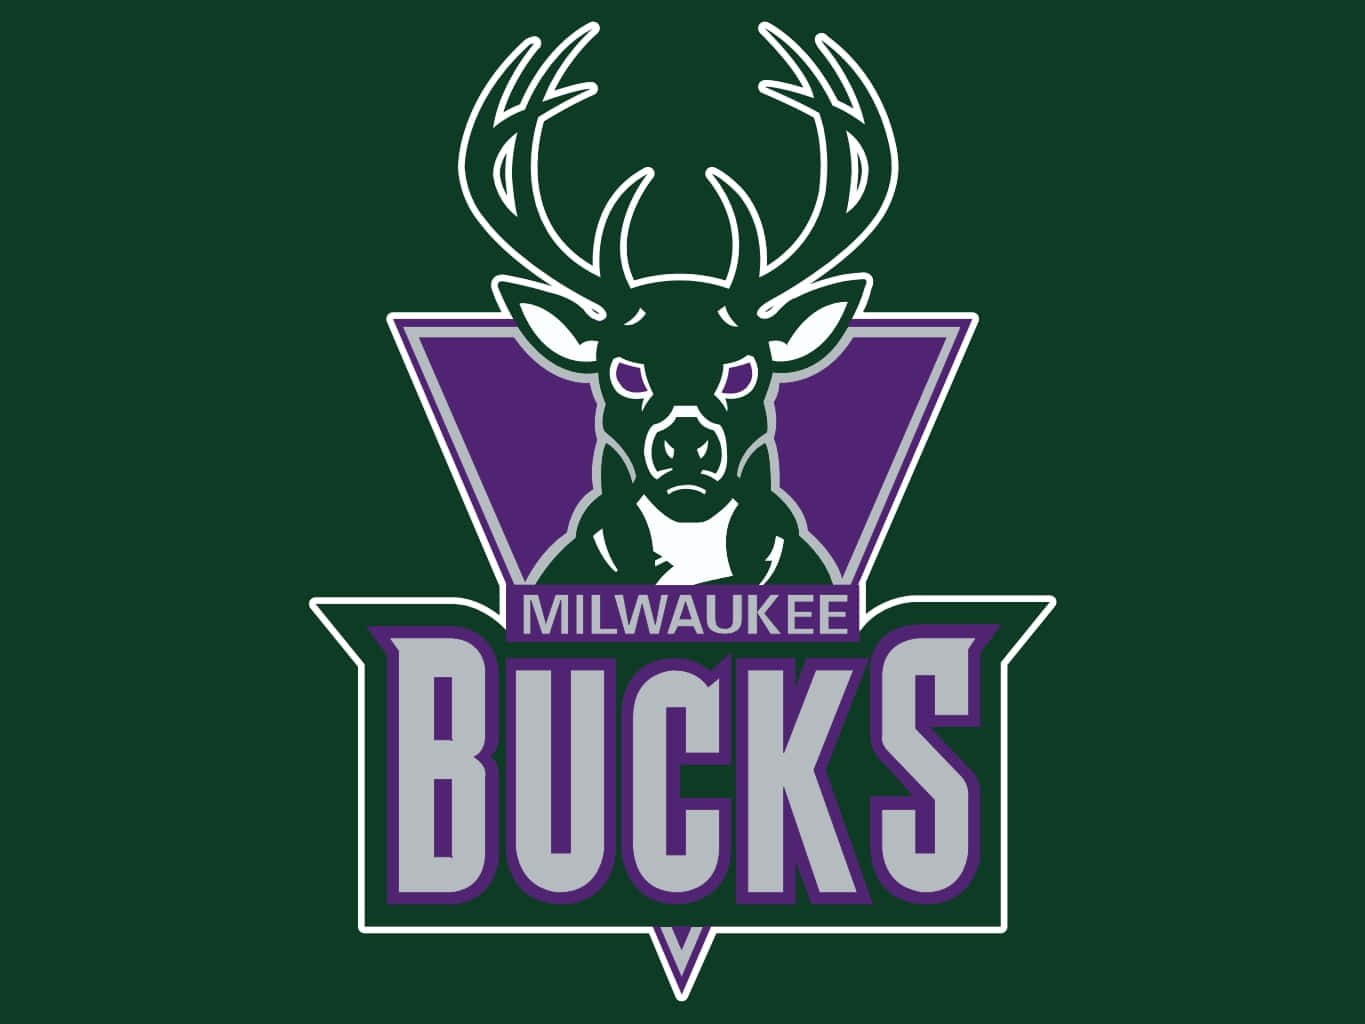 Hetmilwaukee Bucks-logo Som Representerar Staden Milwaukee. Wallpaper